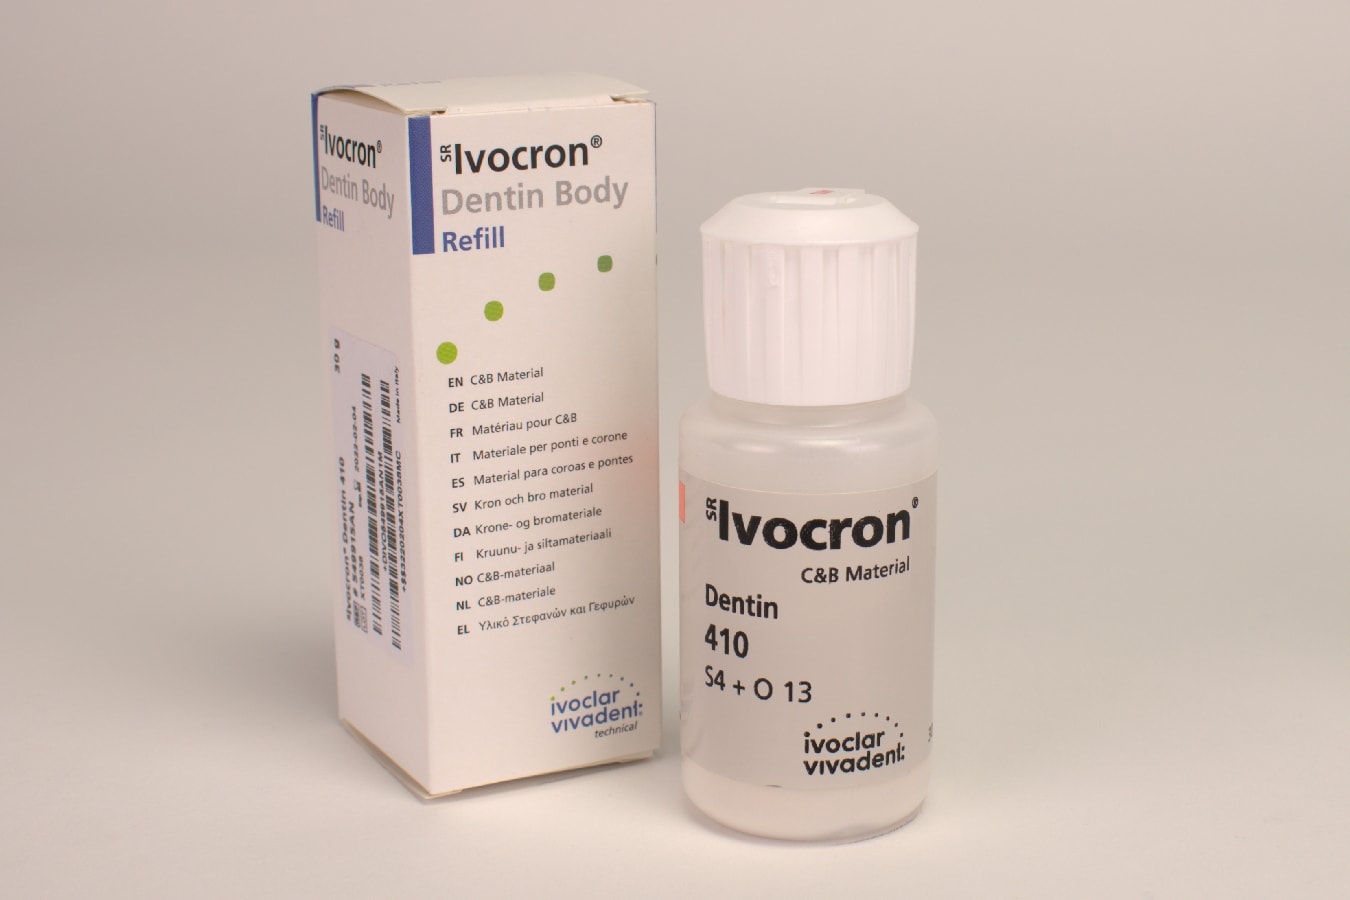 Ivocron Dentin 410/4A 30g